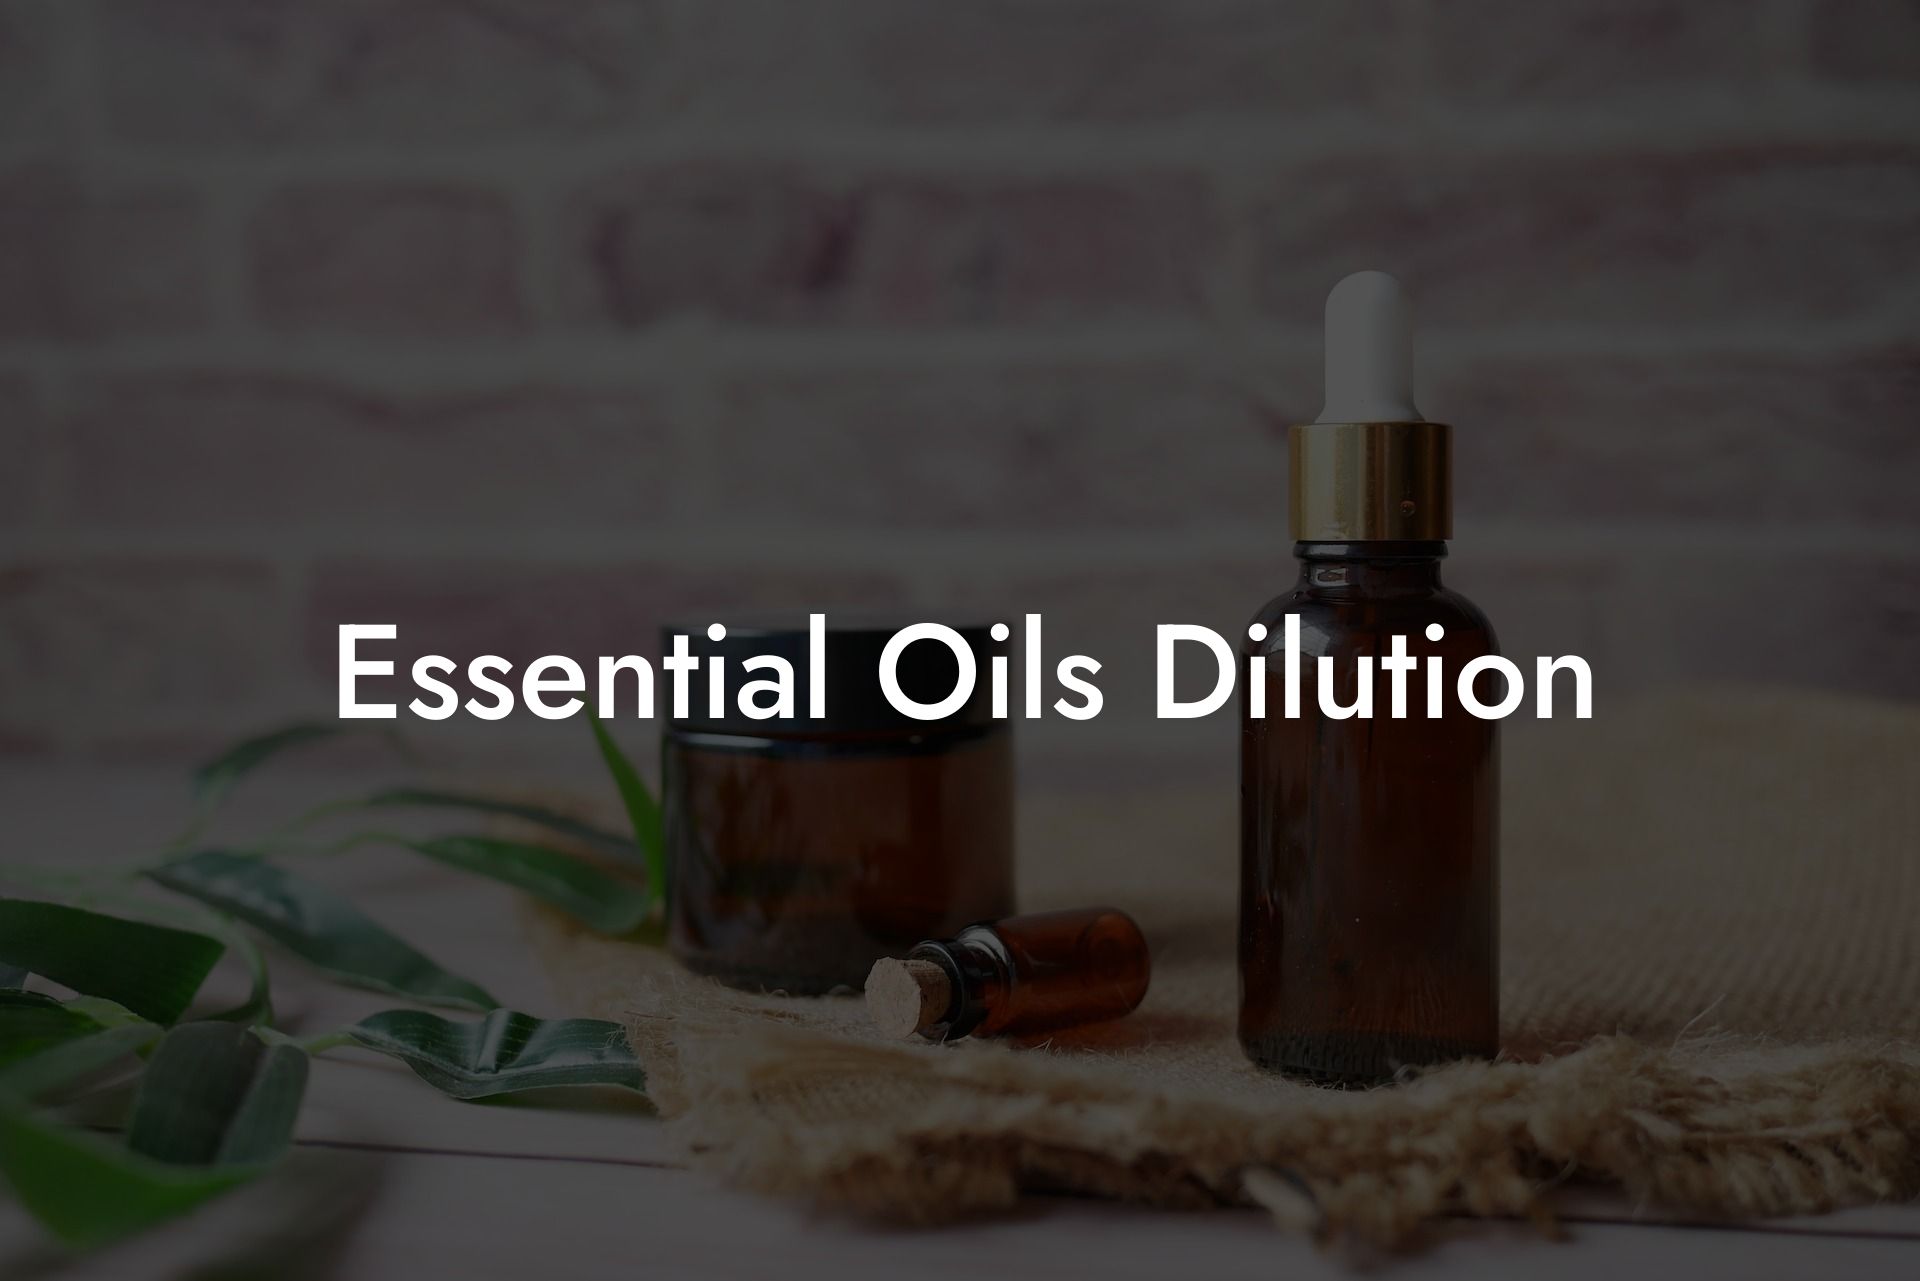 Essential Oils Dilution